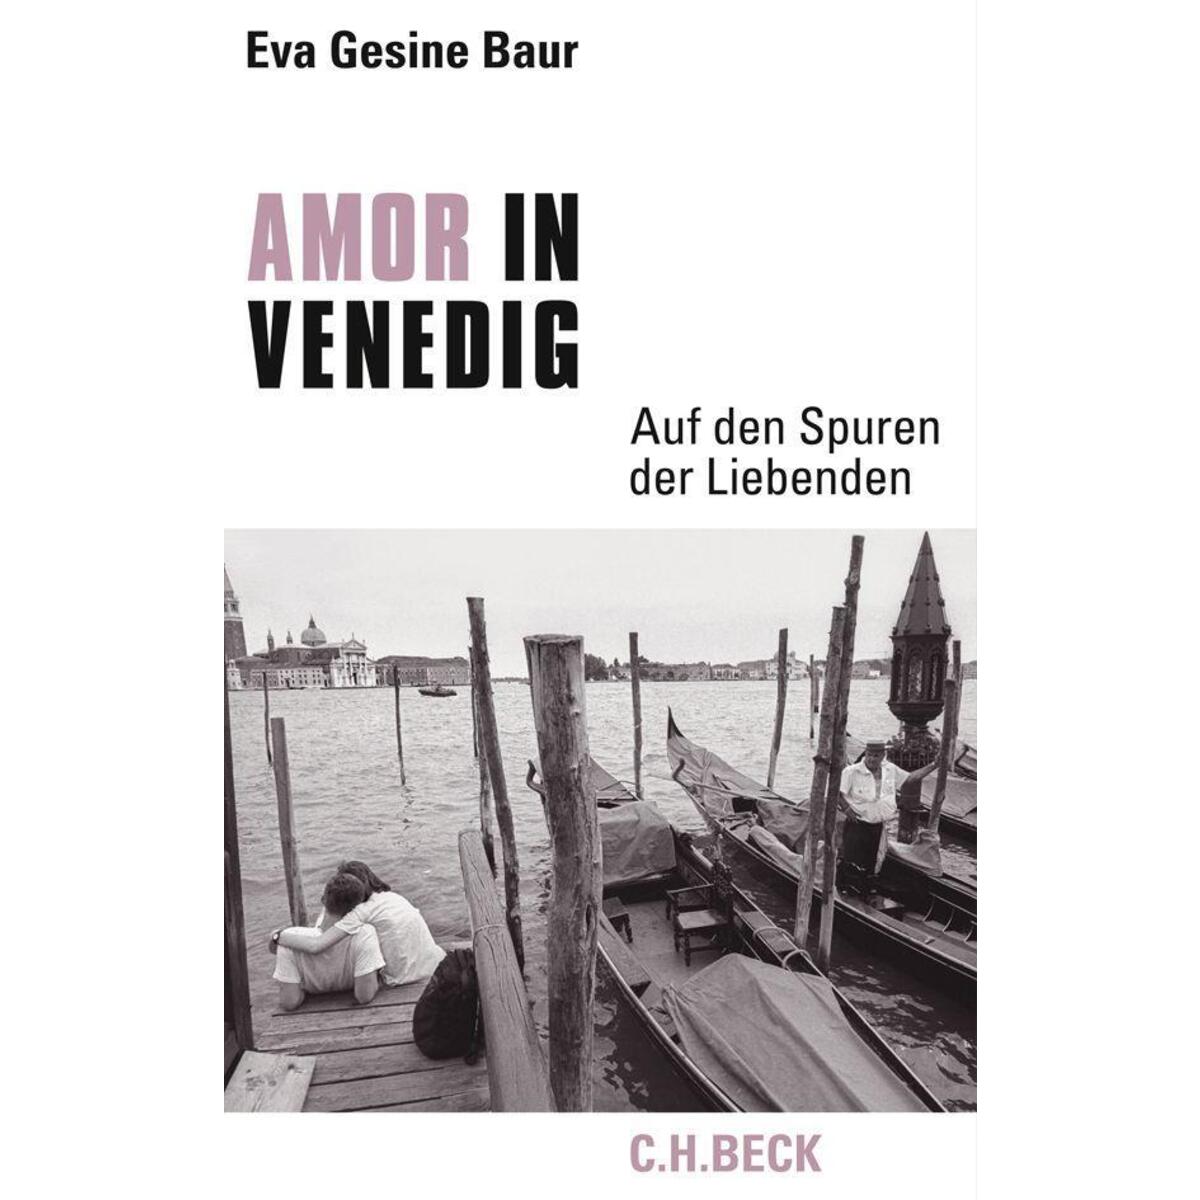 Amor in Venedig von C.H. Beck